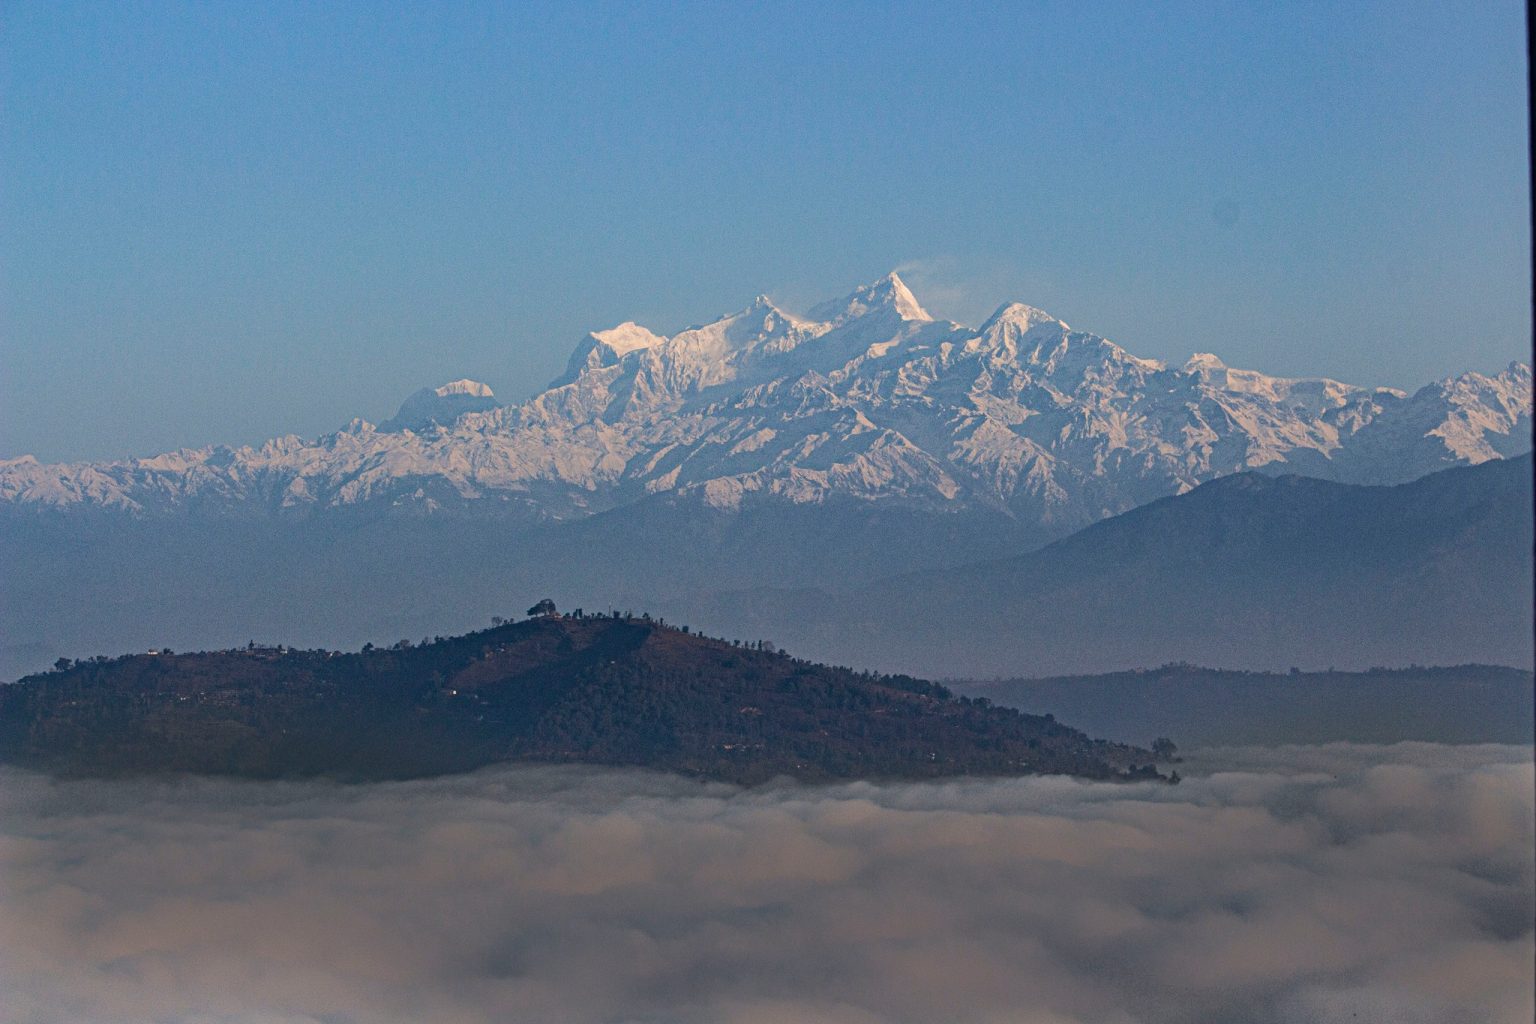 Mt-Hiunchuli-Mt.-Manaslu-Mt.-Boudha-as-seen-from-the-Rooftop-of-Shreeban-Nature-Camp-1536x1024